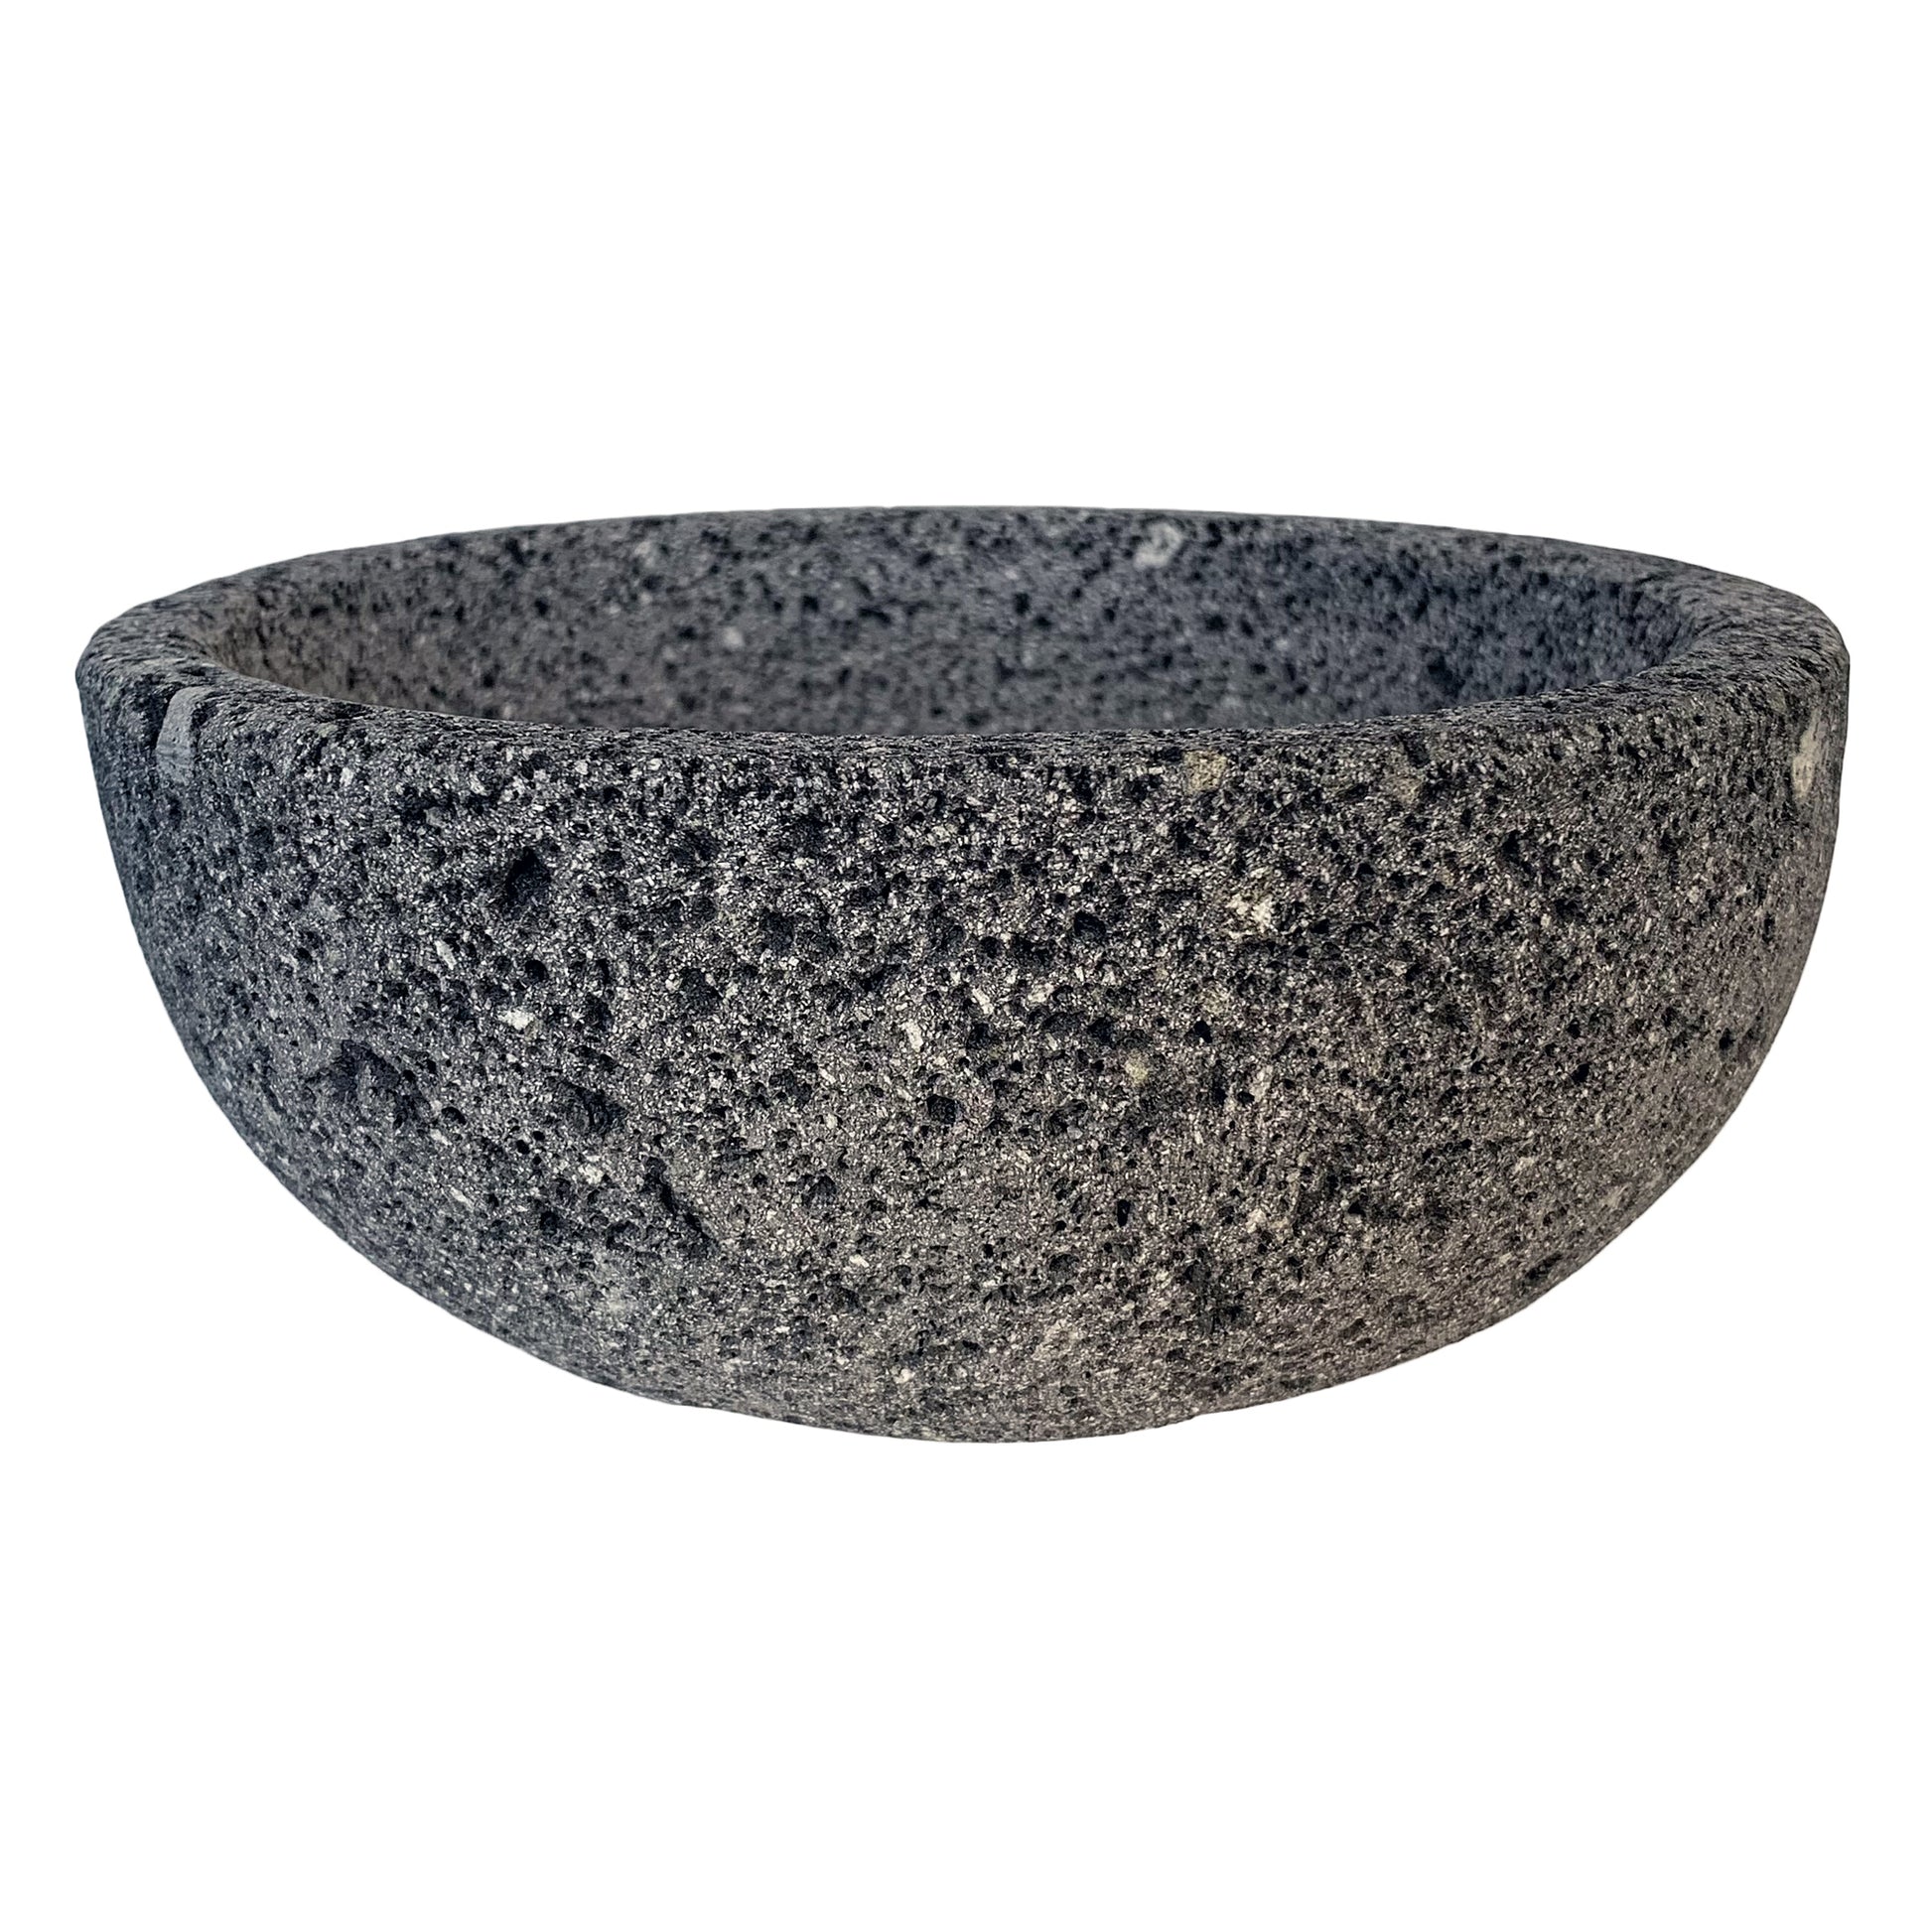 Volcanic Stone Pinch Pot Set. Condiment Bowls. Set of 3. | Craftruly